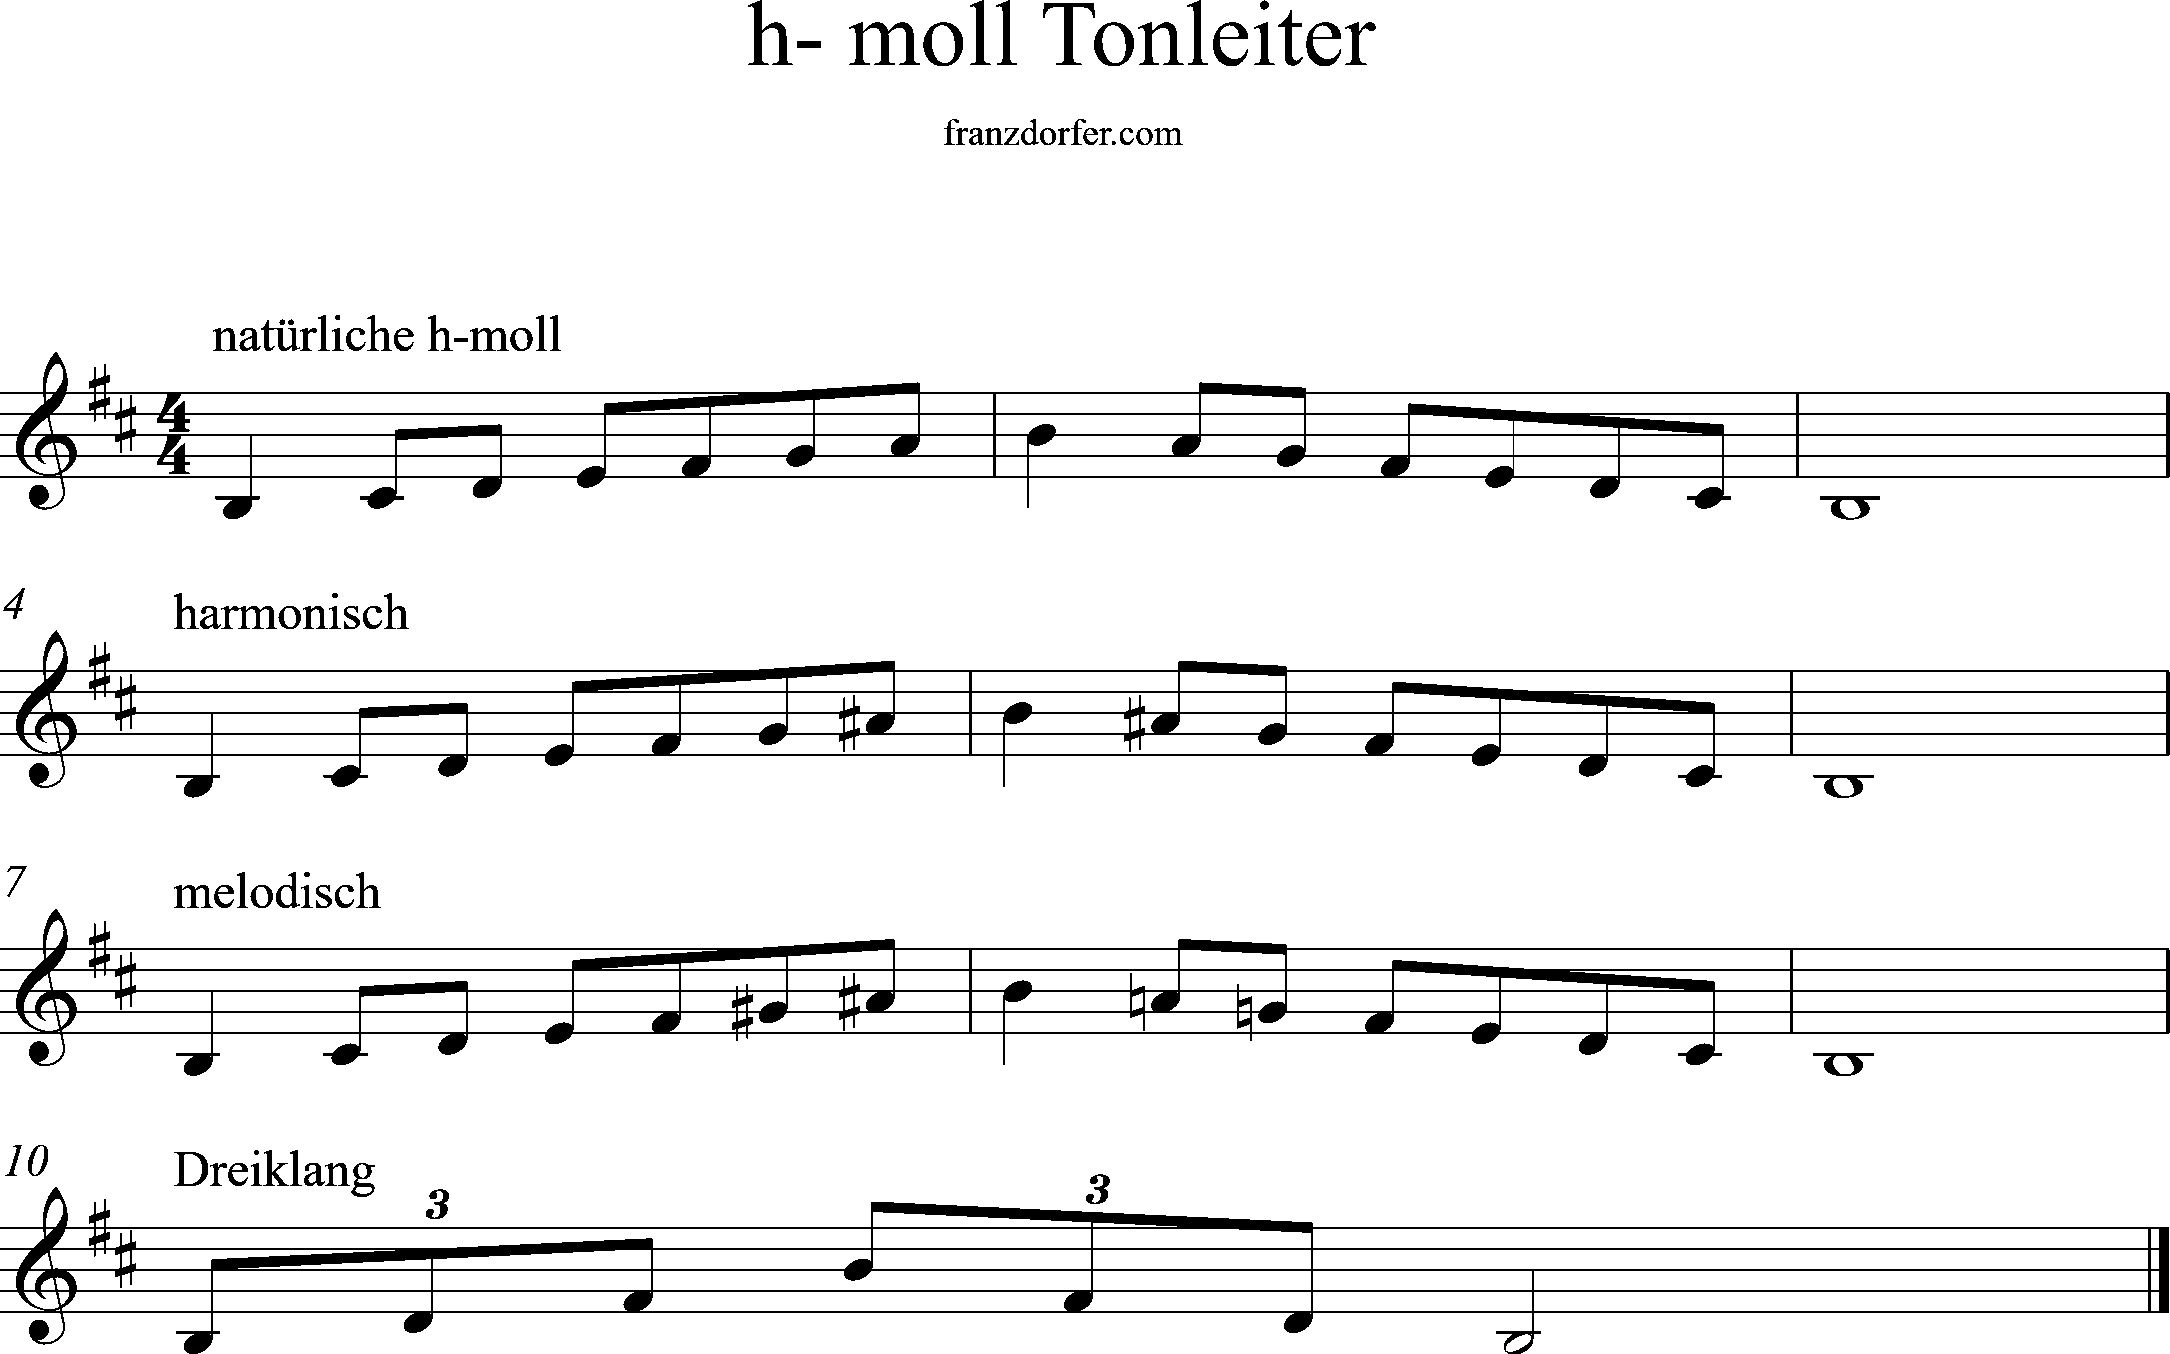 b-minor scale, treble clef, lower octave